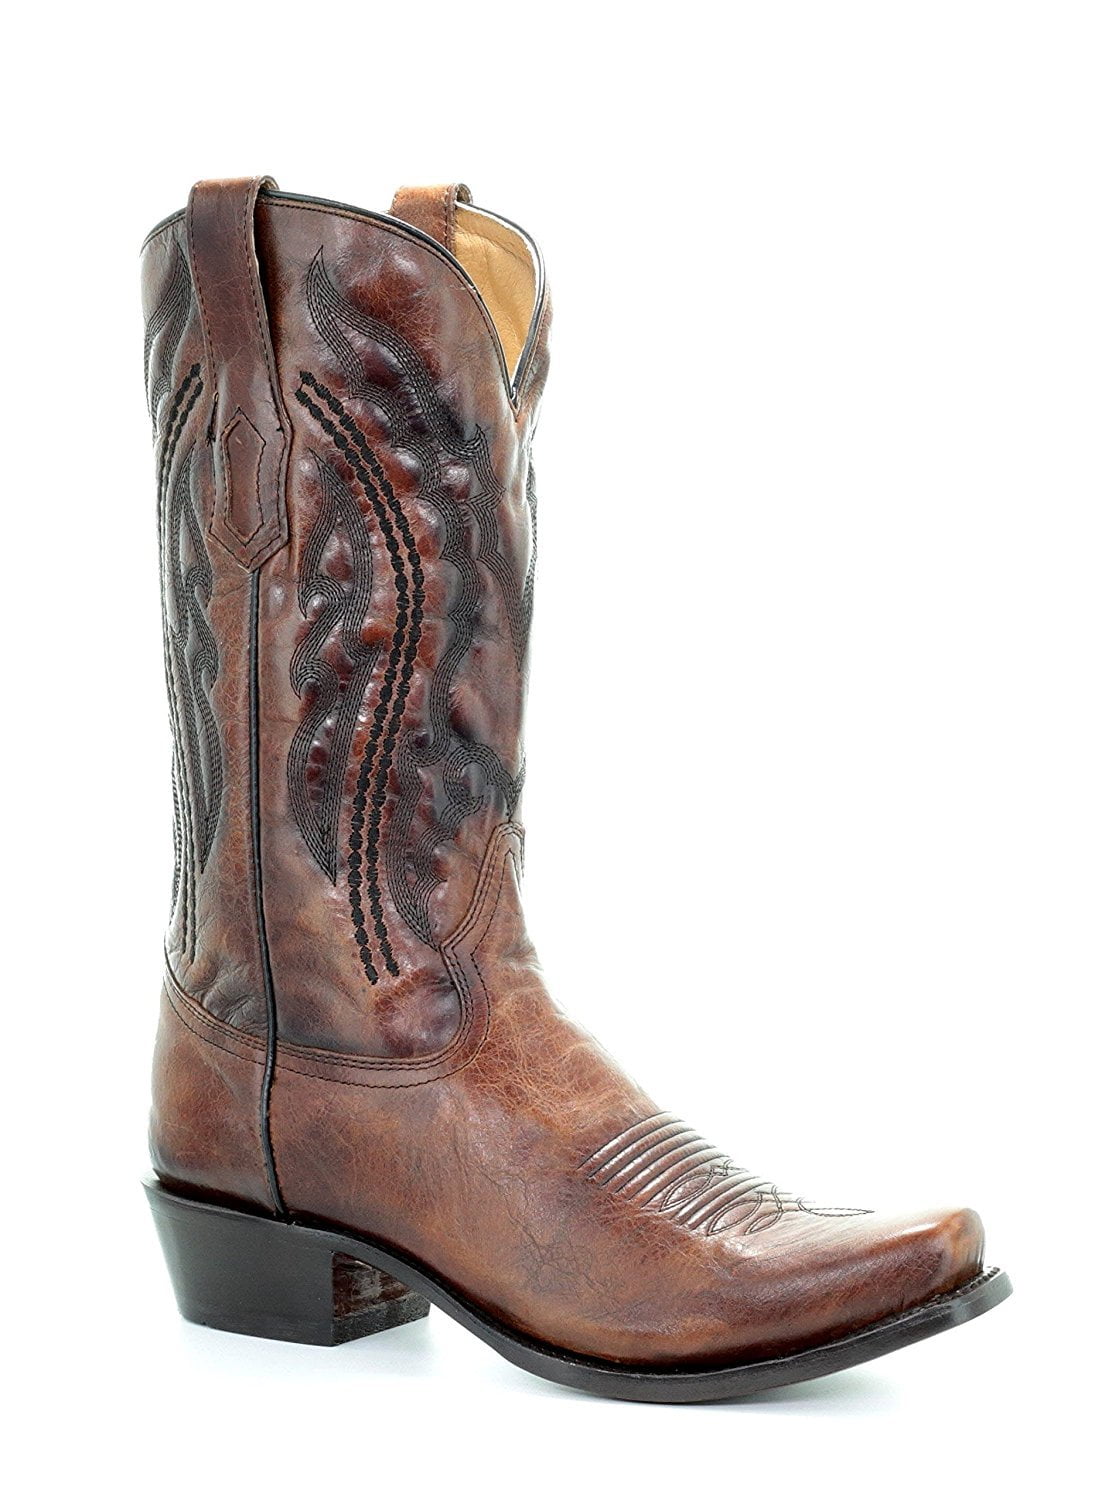 Buy > 11 ee cowboy boots > in stock